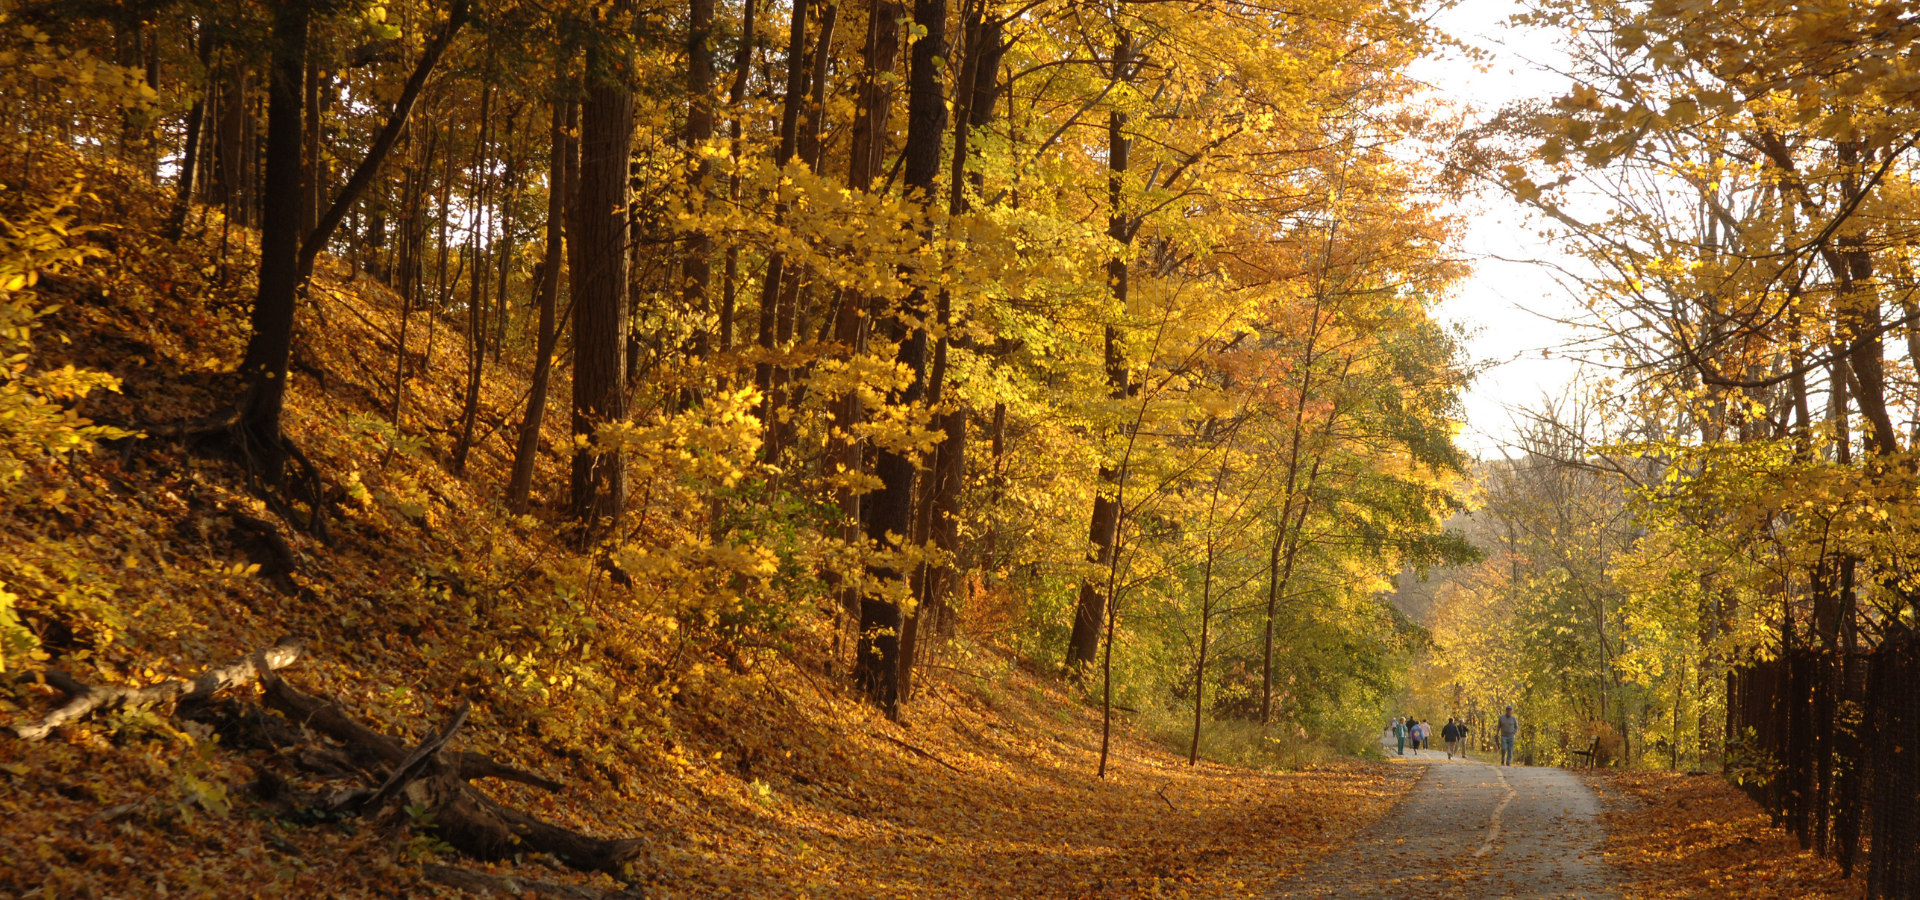 Walking and biking trail in the fall.